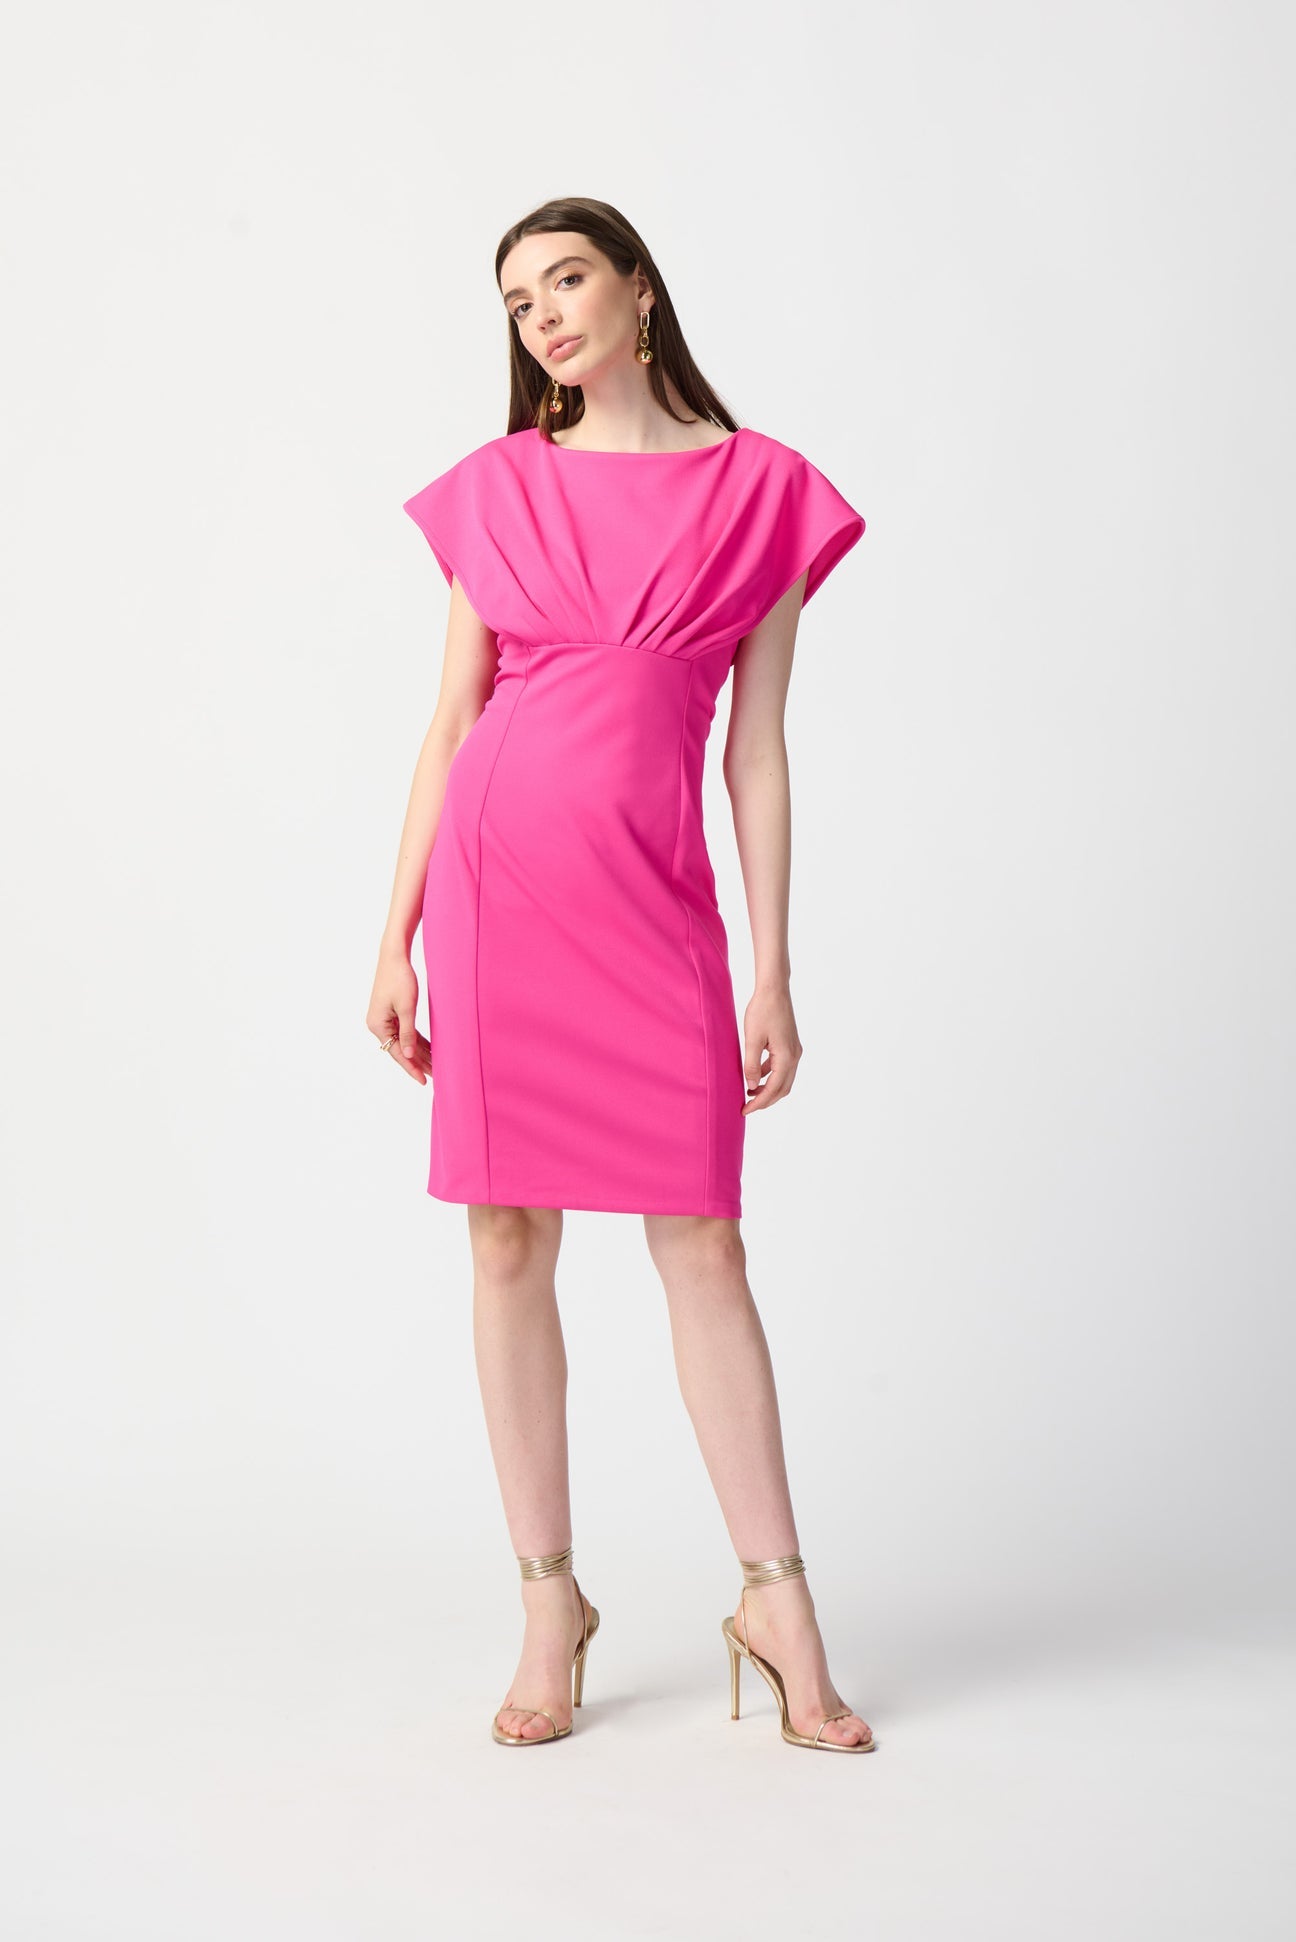 Ultra Pink Cap Sleeve Dress